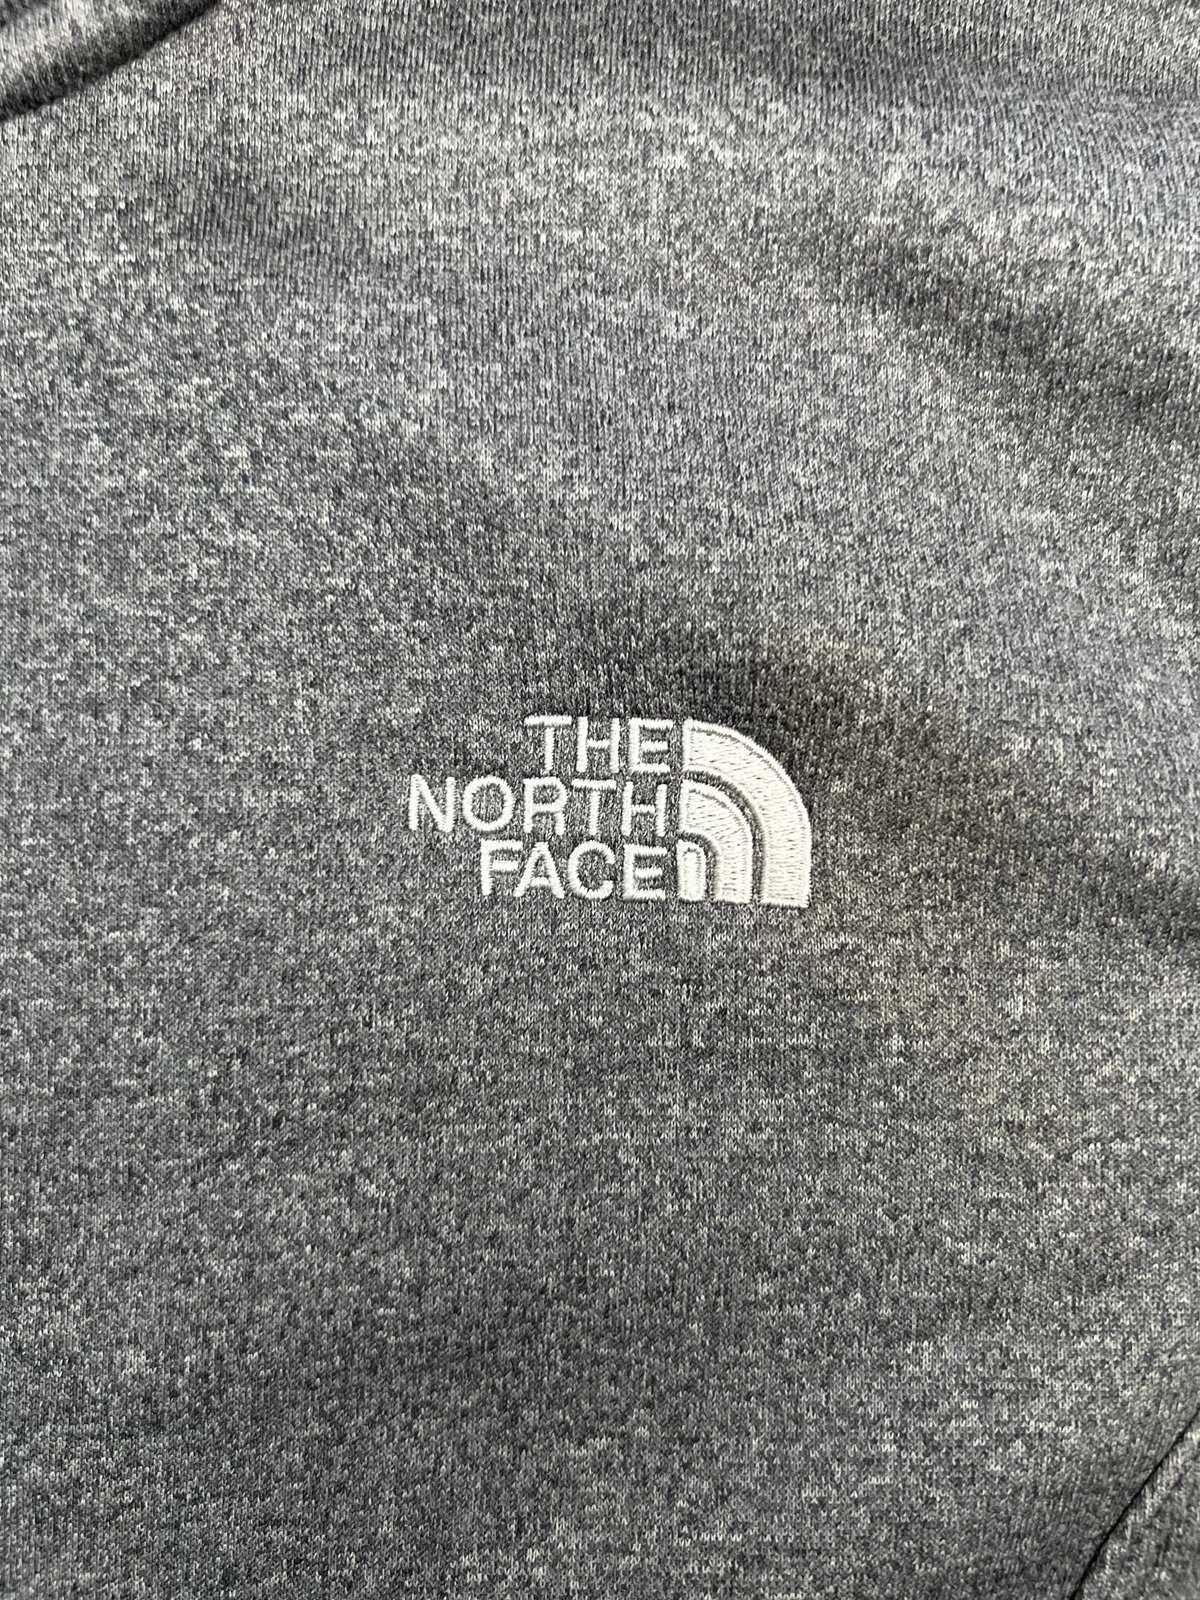 Elegant The North Face Women’s XL Gray Full Zip Jacket Fleece Lined SUPER SOFT orHf4e8bR Zero Profit 